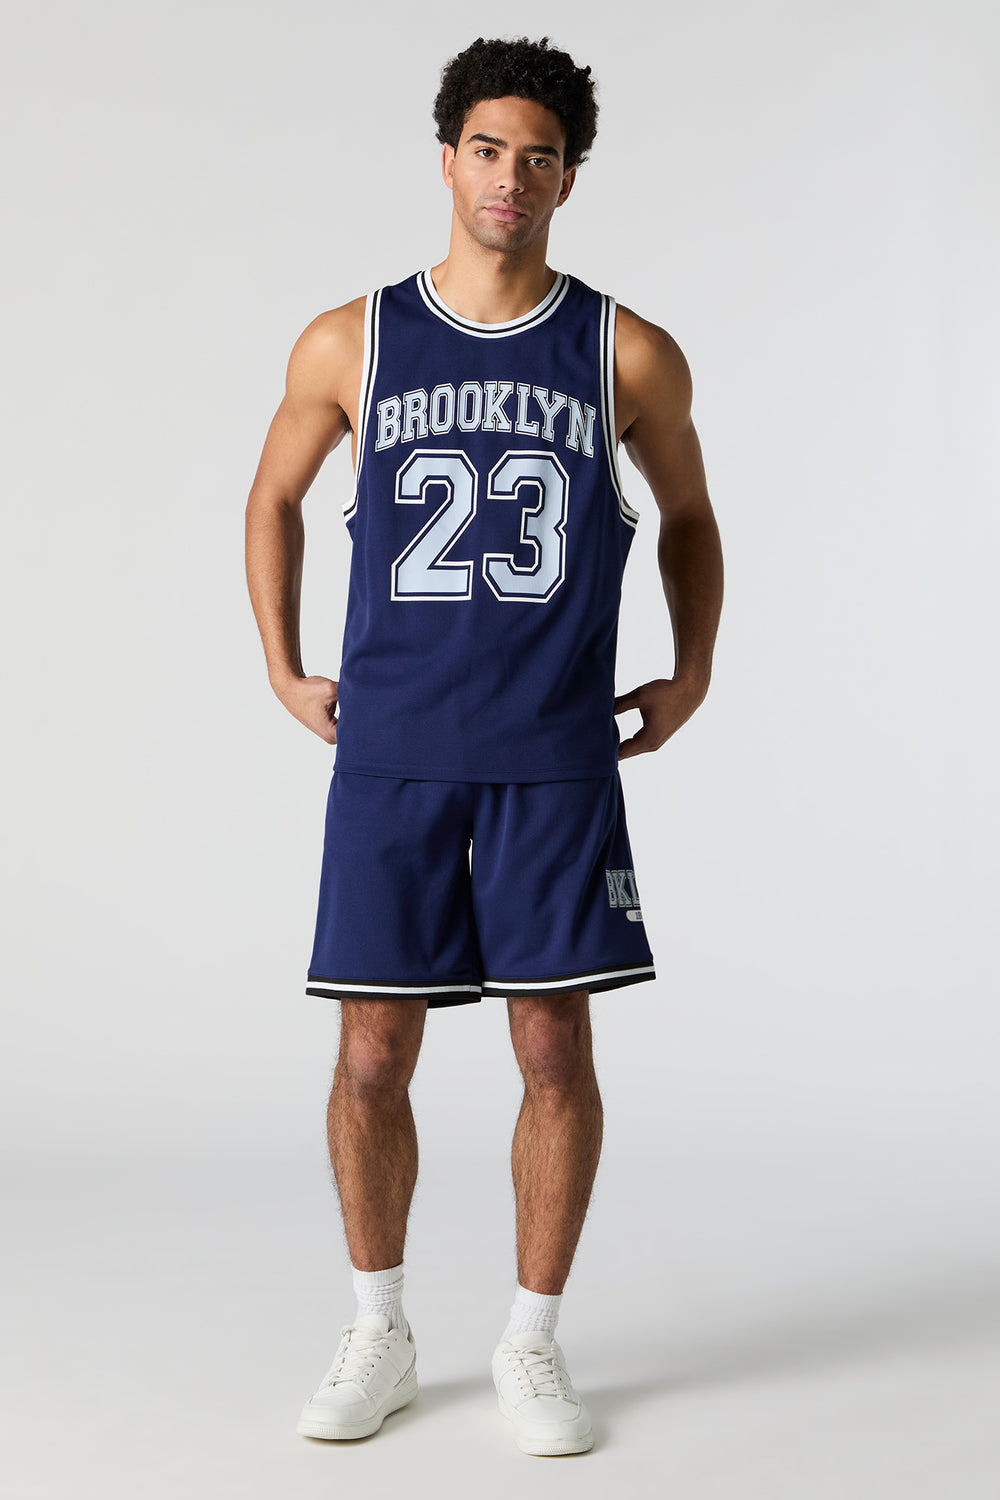 Brooklyn Graphic Mesh Basketball Jersey Brooklyn Graphic Mesh Basketball Jersey 3